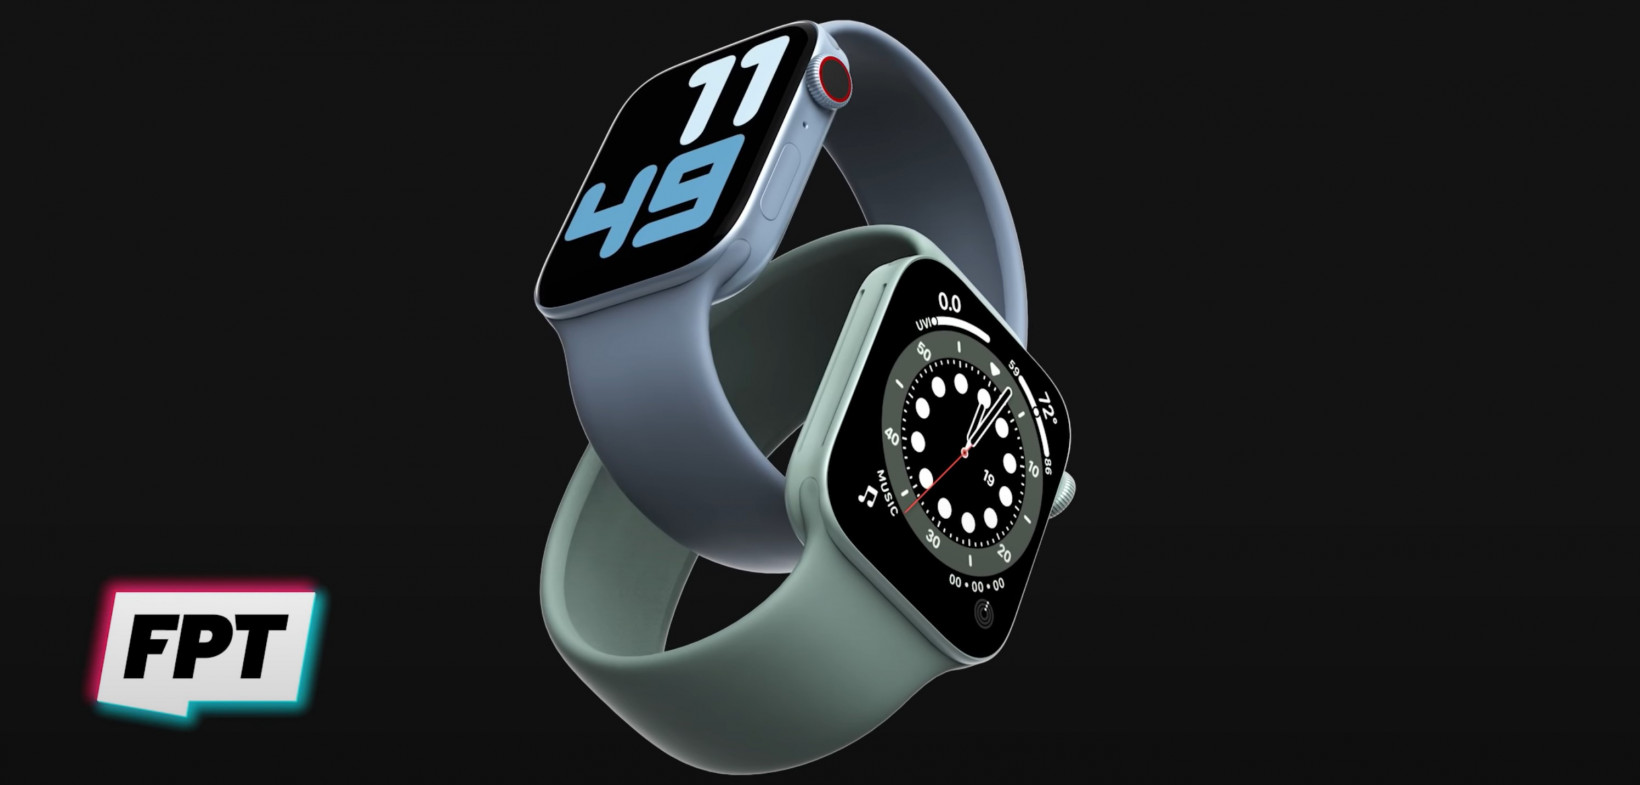 Apple Watch Series 7 